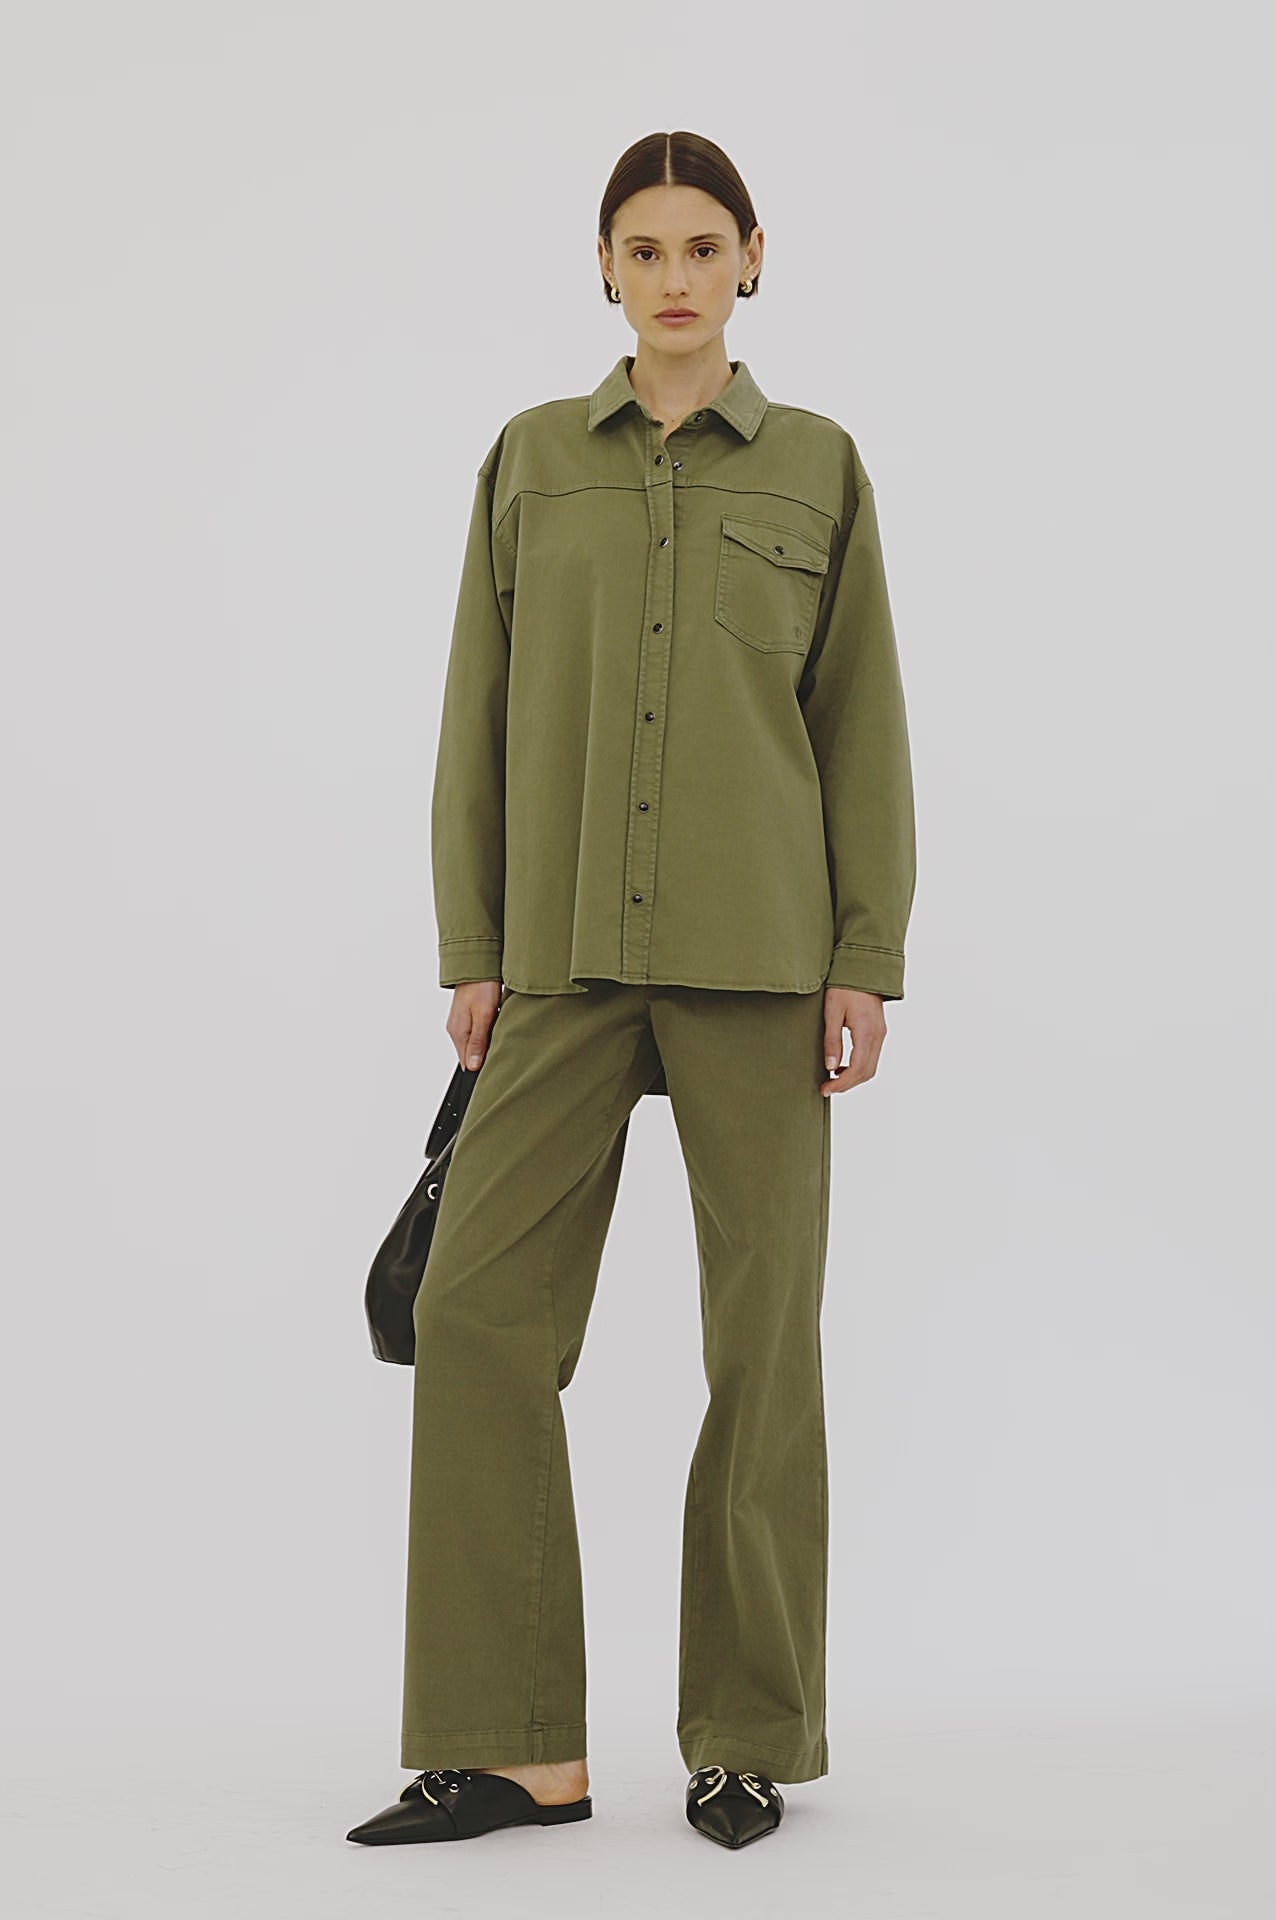 ANINE BING Sloan Shirt - Army Green - On Model Video